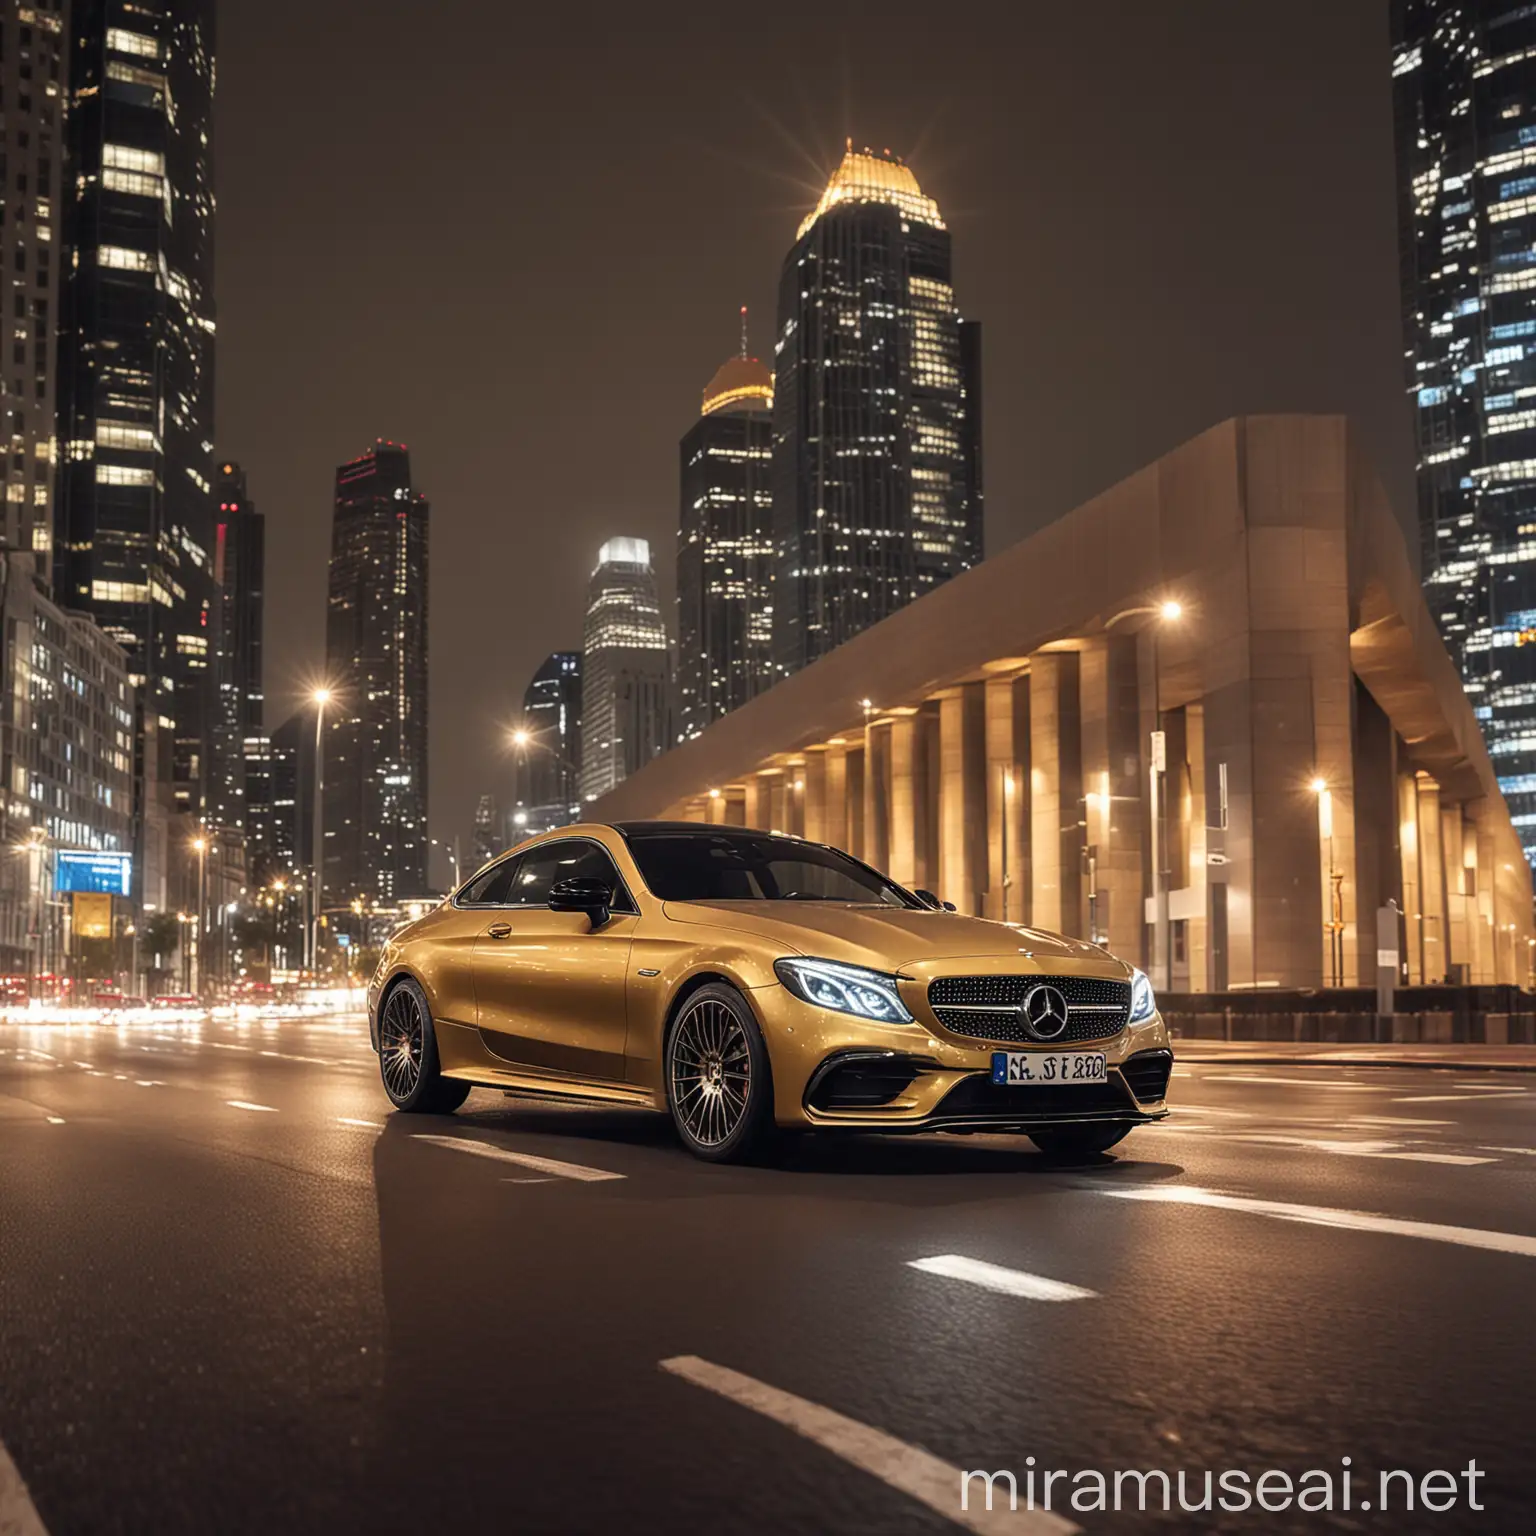 Fast Silver MercedesBenz C Class Coup in Night City Metropolis